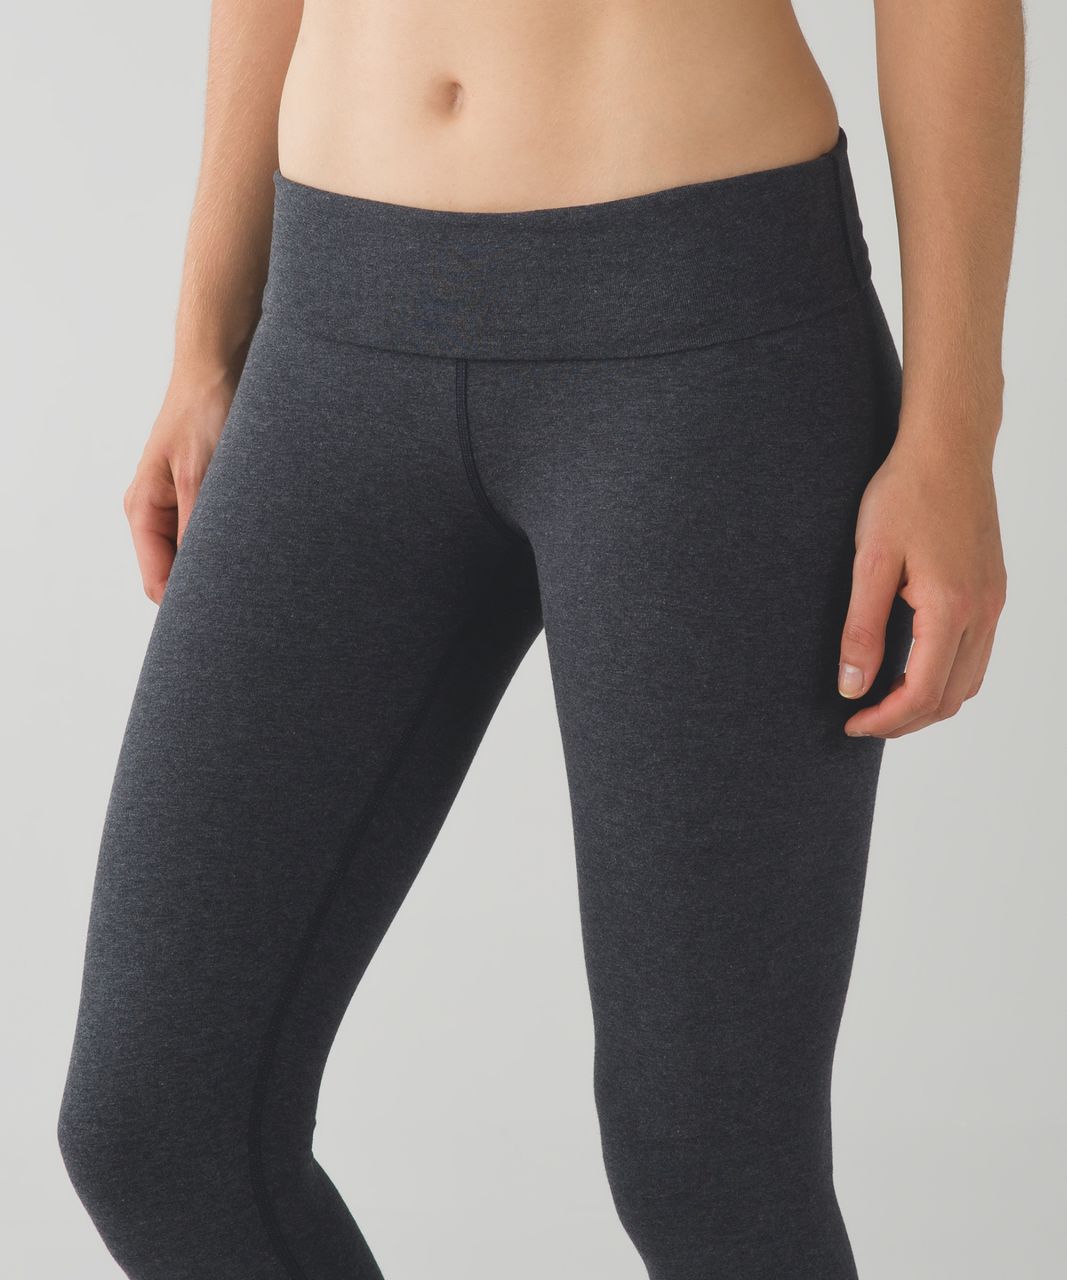 Lululemon Wunder Under Pant (Hi-Rise) *Cotton Size 6 in Heathered Speckled  Black Yoga Leggings Tights Grey